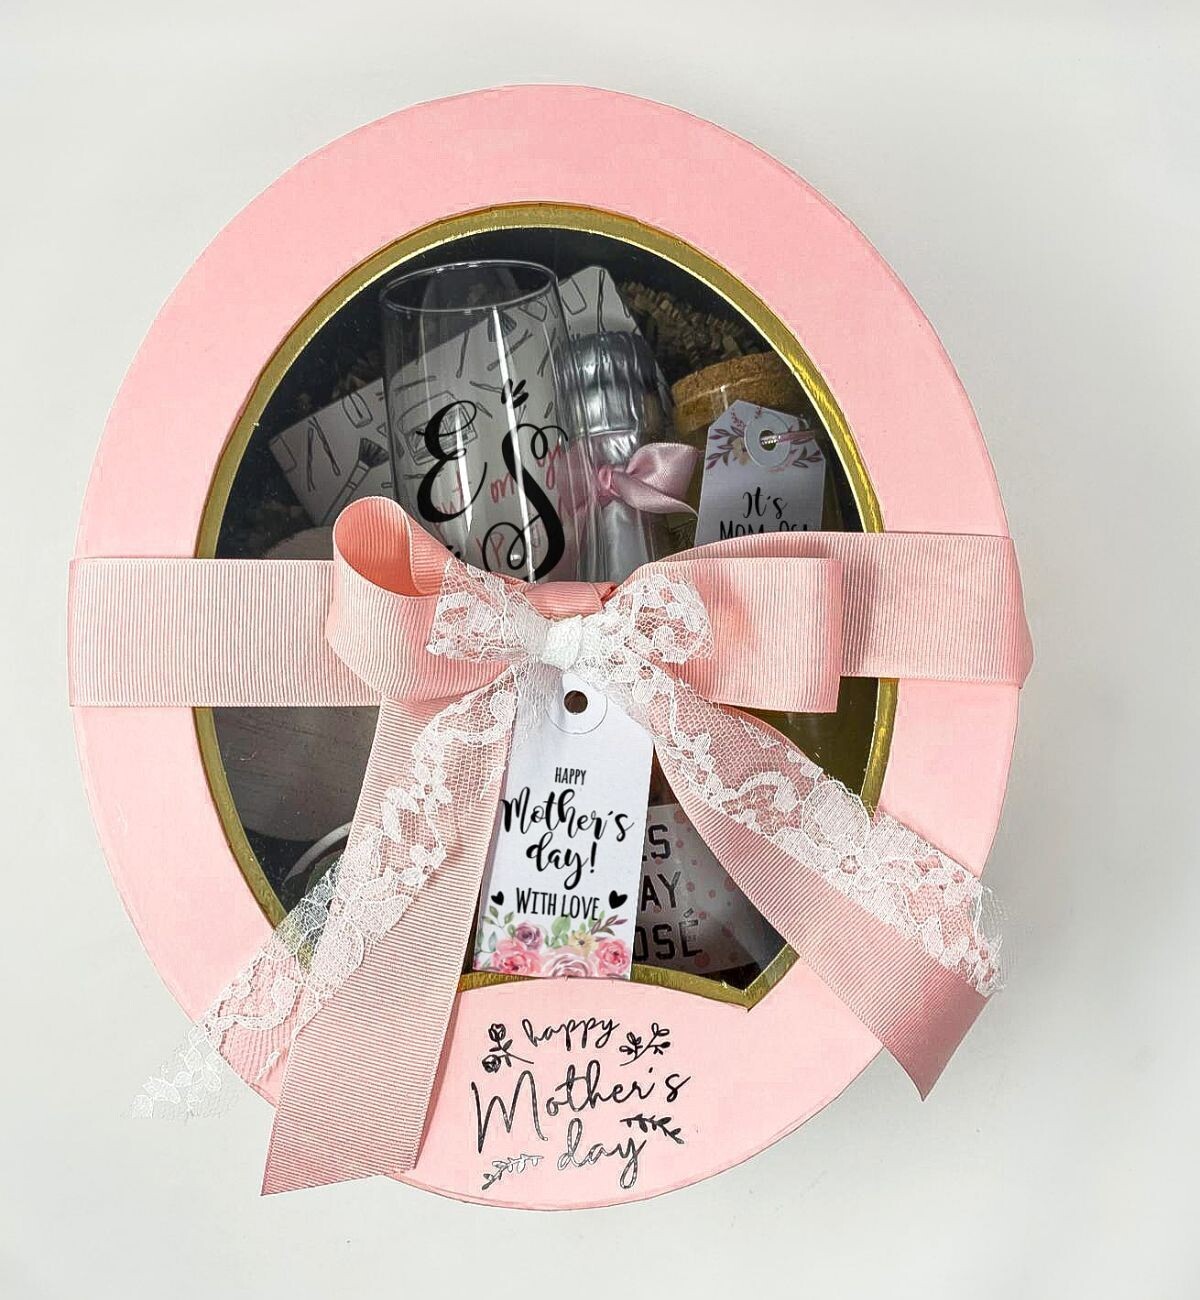 MOM-Osa Time Gift Box